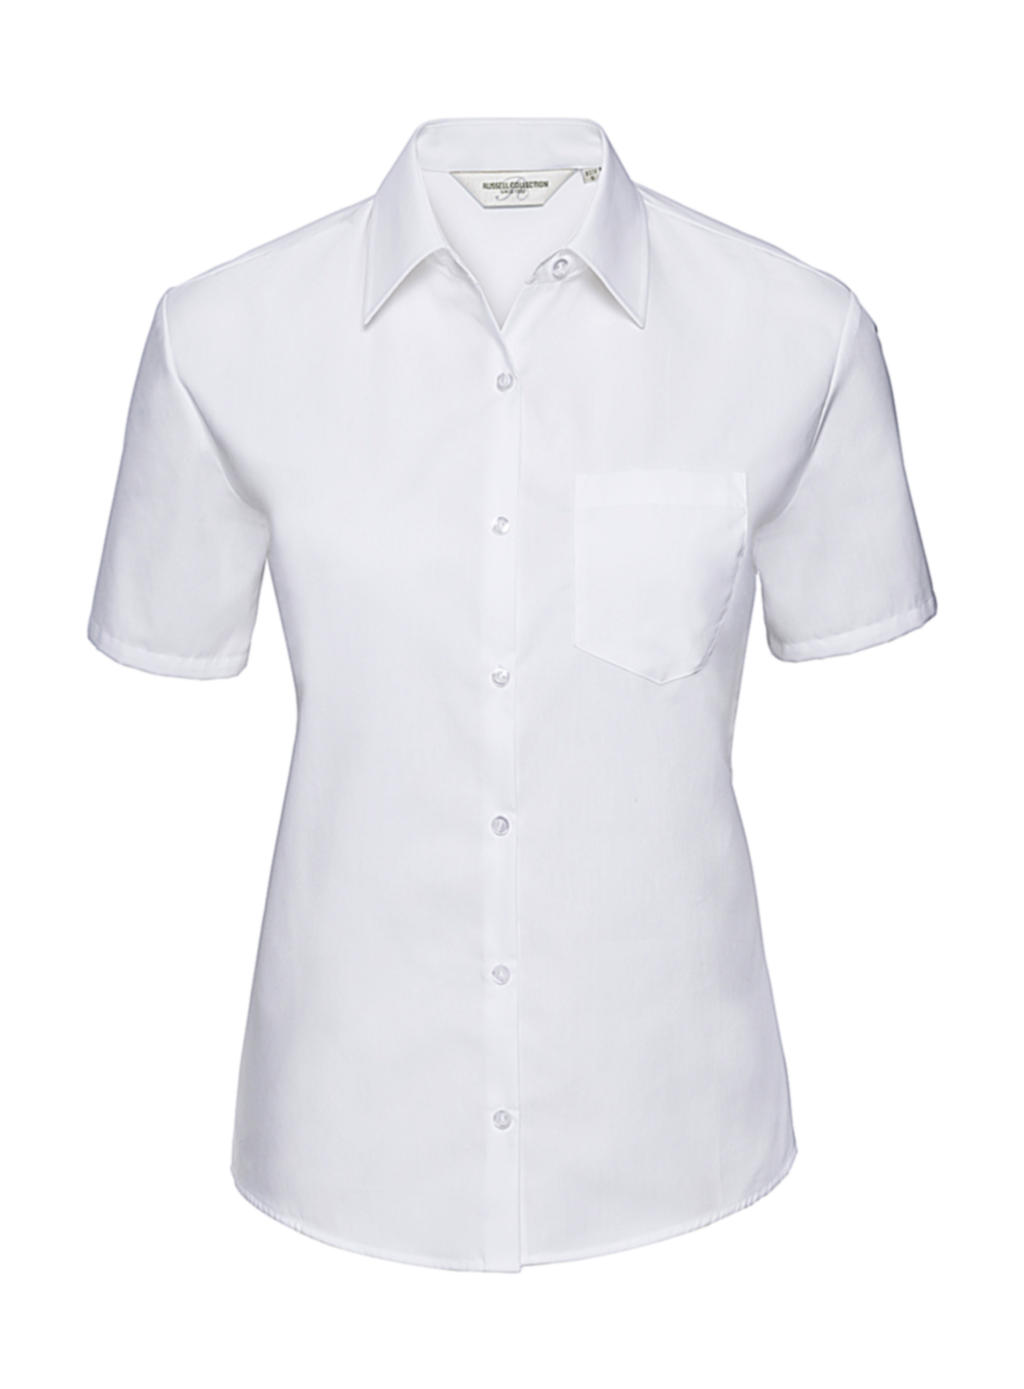  Ladies Cotton Poplin Shirt in Farbe White